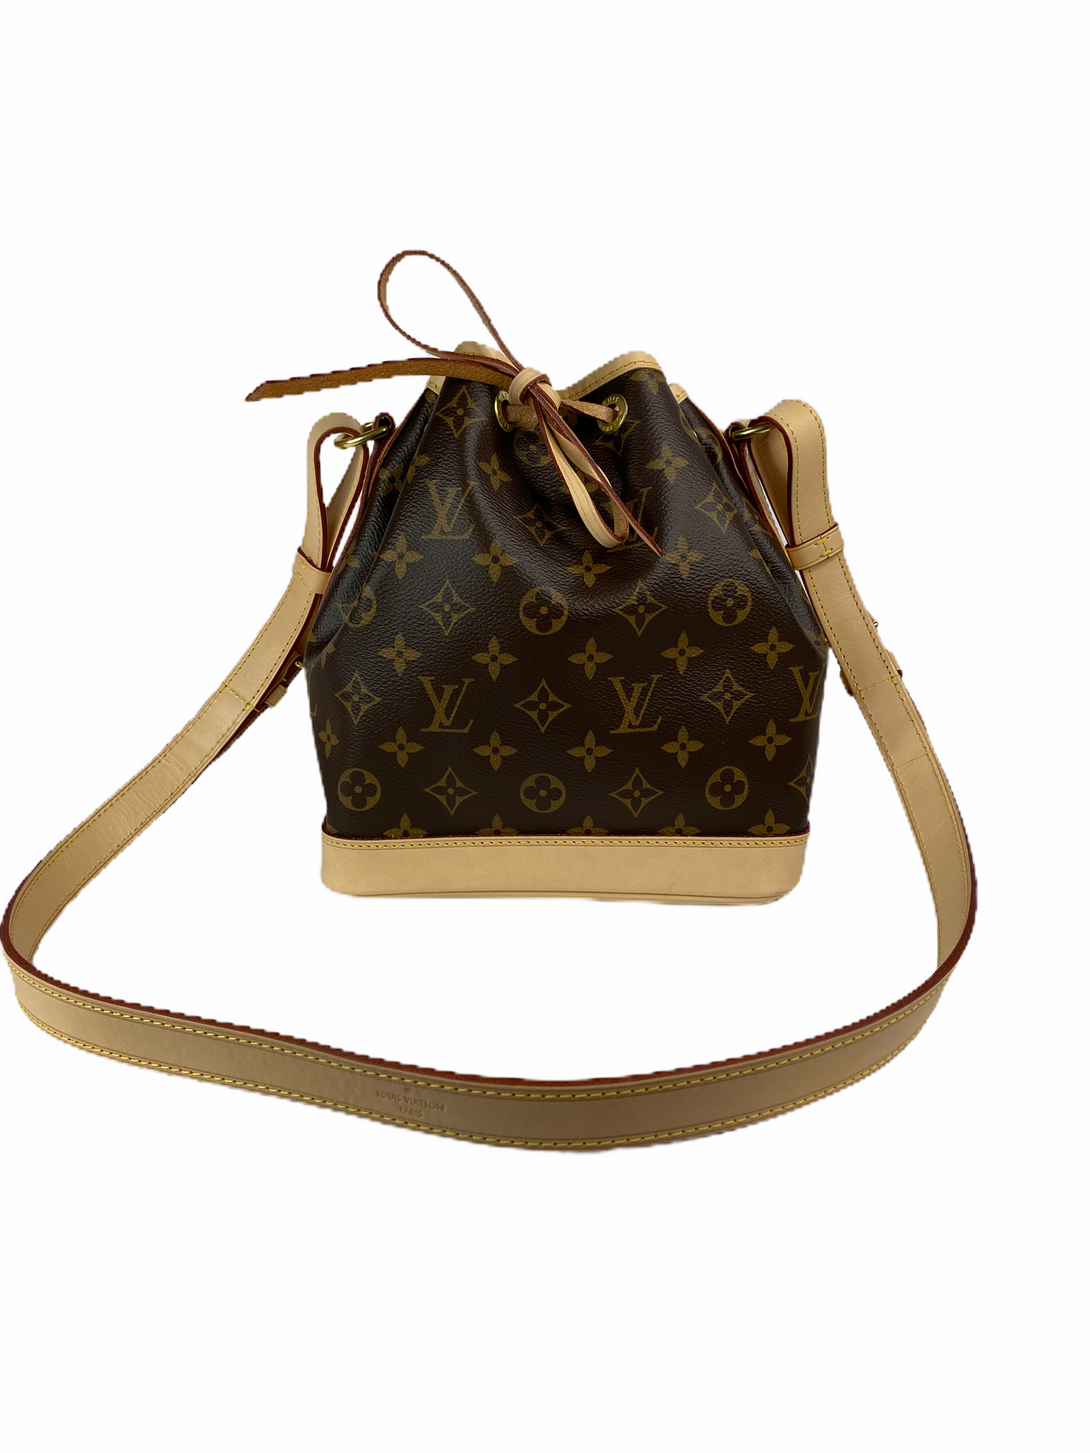 Louis Vuitton Monogram "Noe BB" Bucket Bag - As Seen on Instagram Live 16/08/20 - Siopaella Designer Exchange